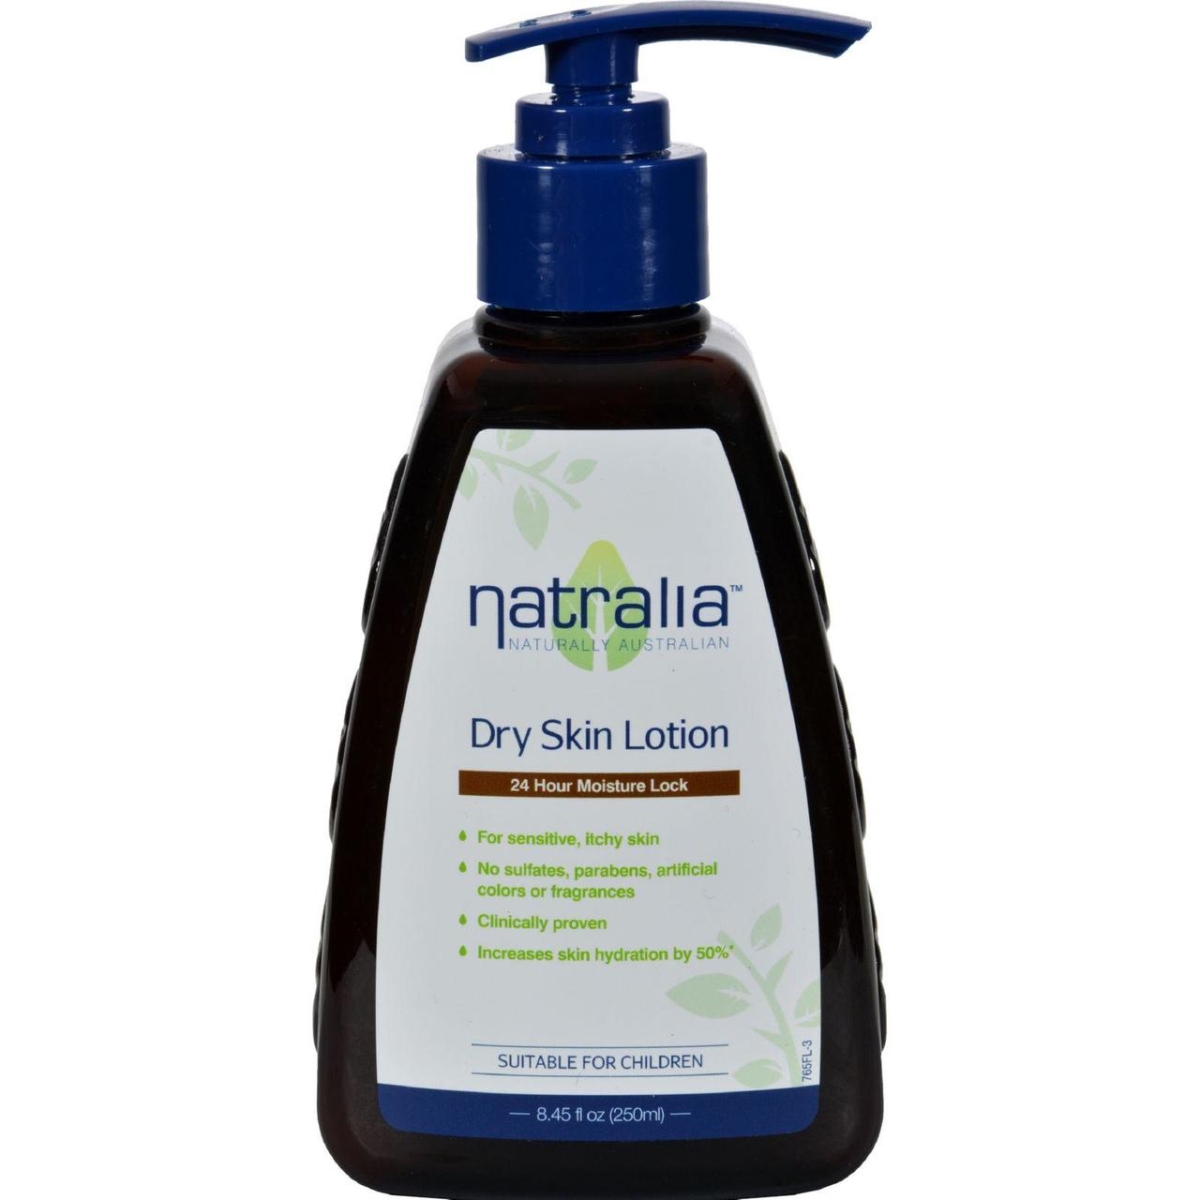 Hg0100701 8.45 Fl Oz Dry Skin Lotion